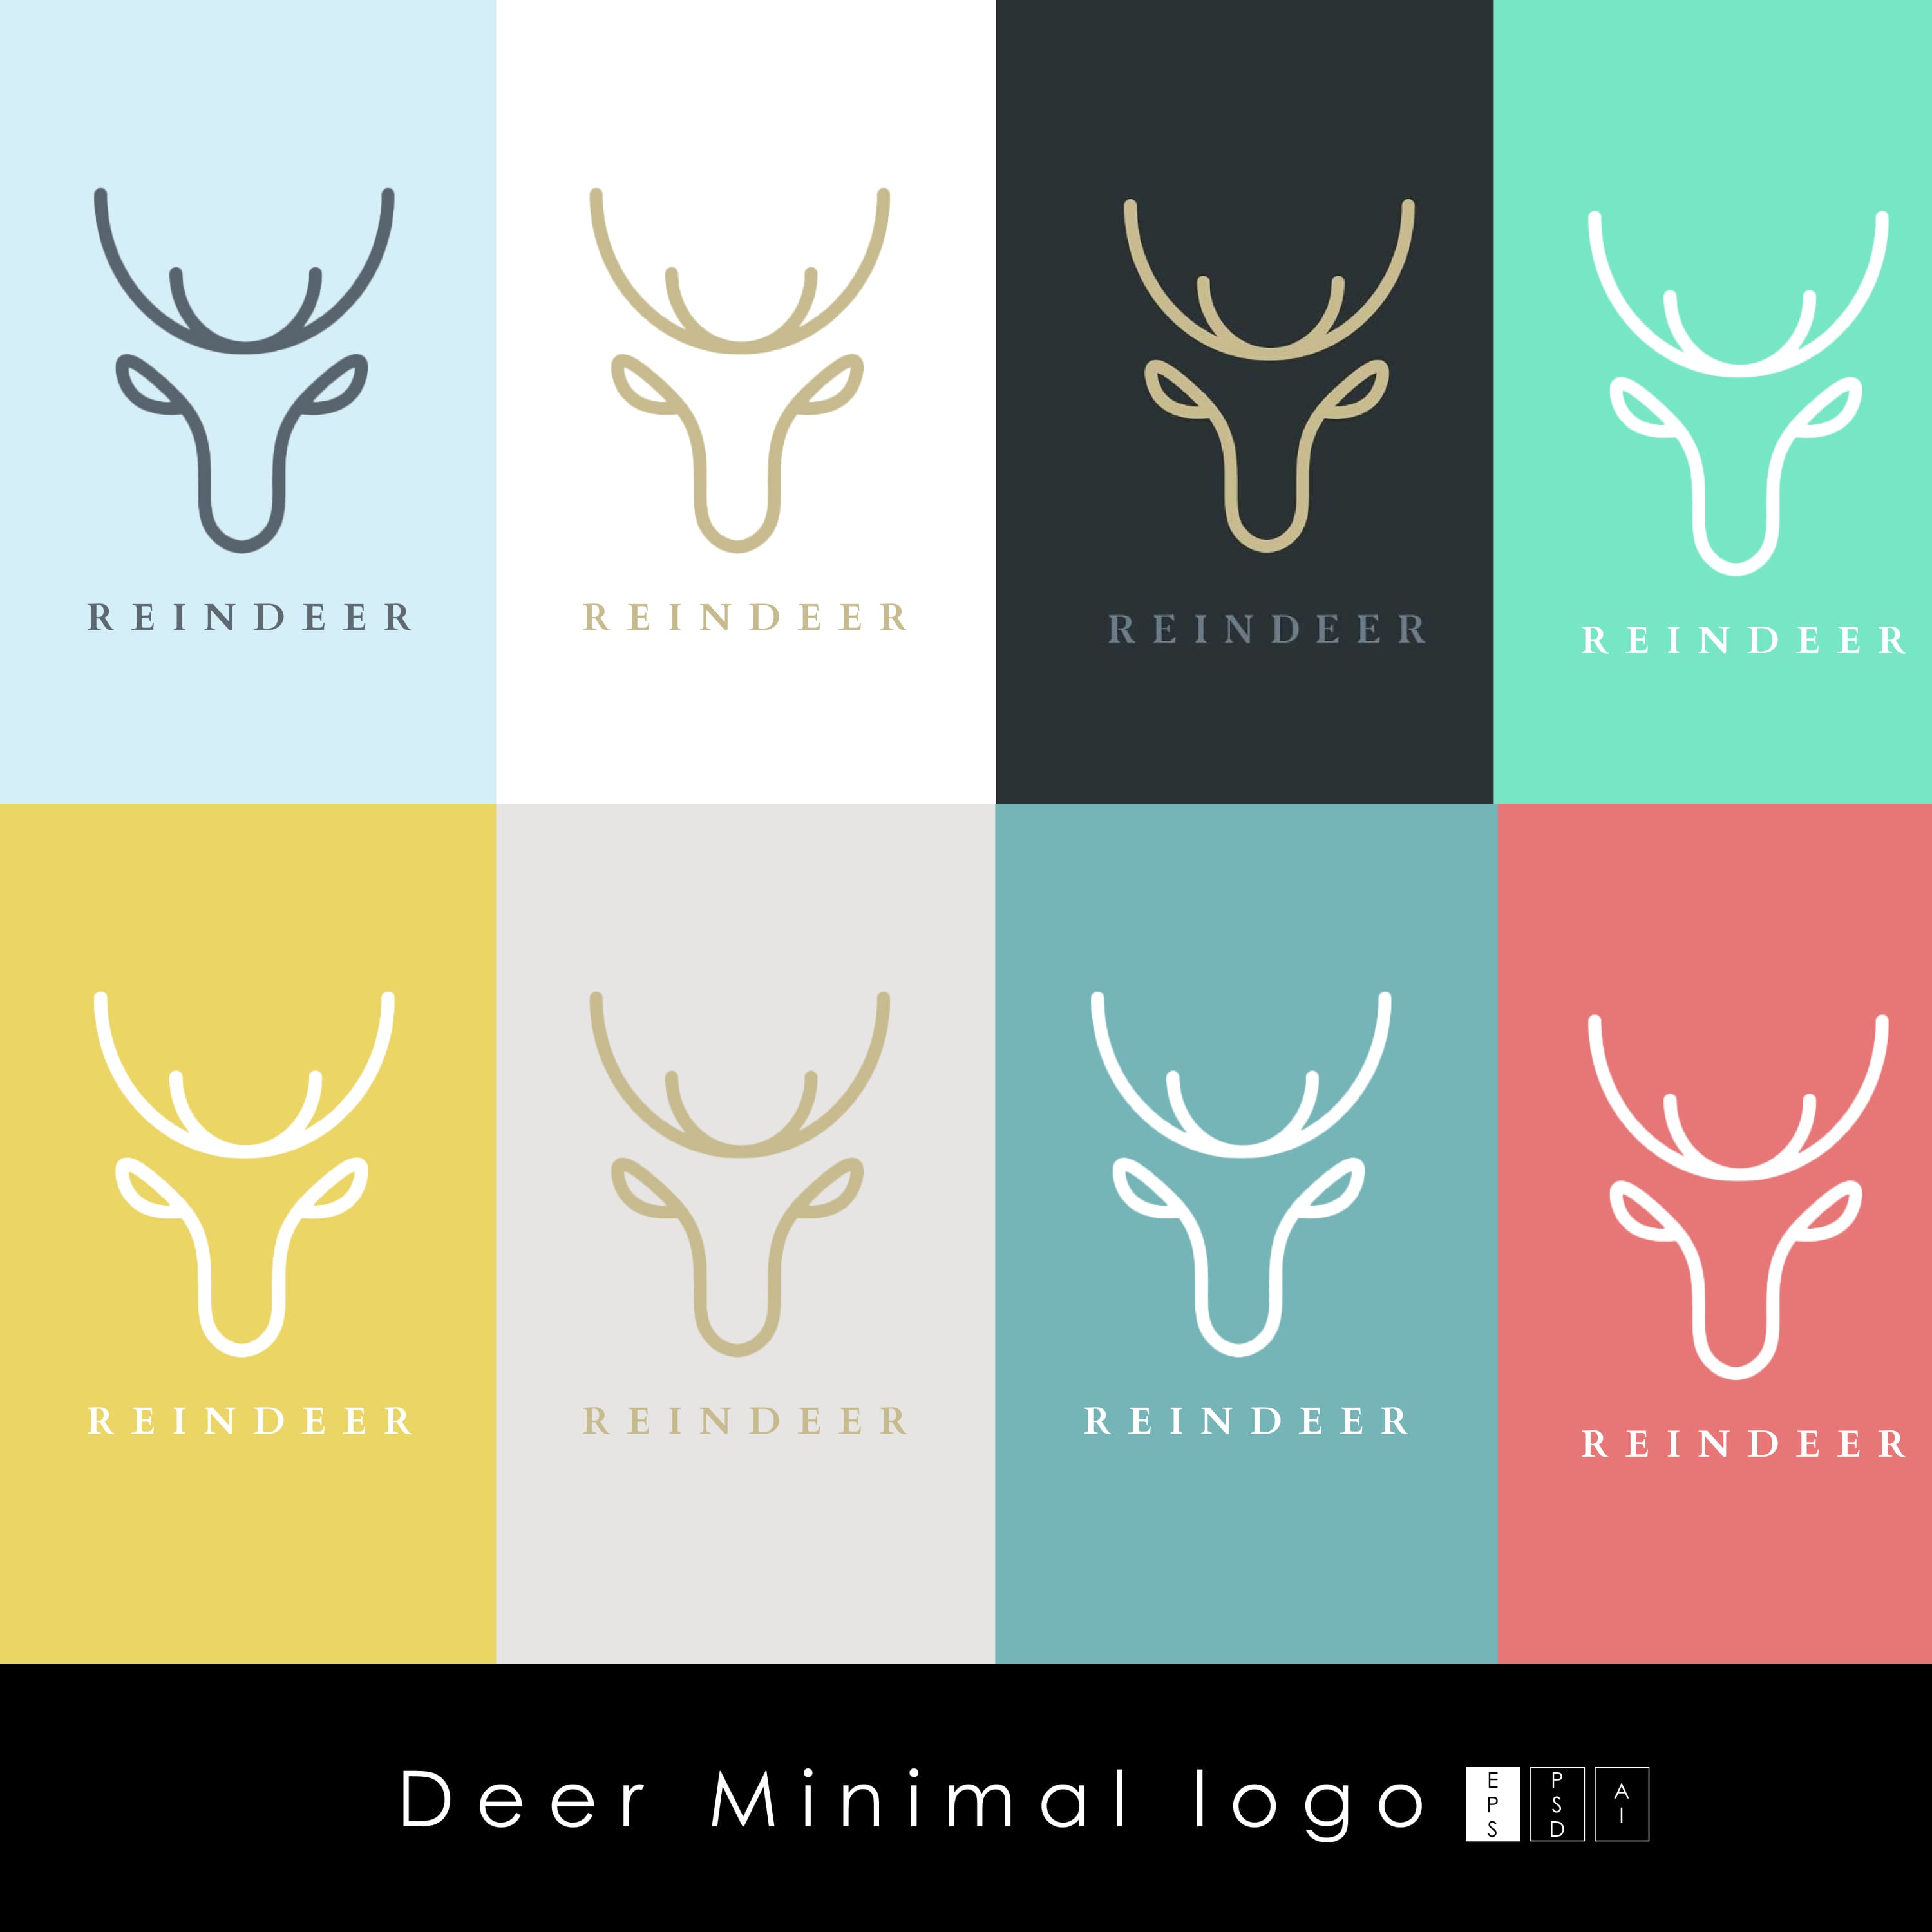 Deer Minimal logo cover.